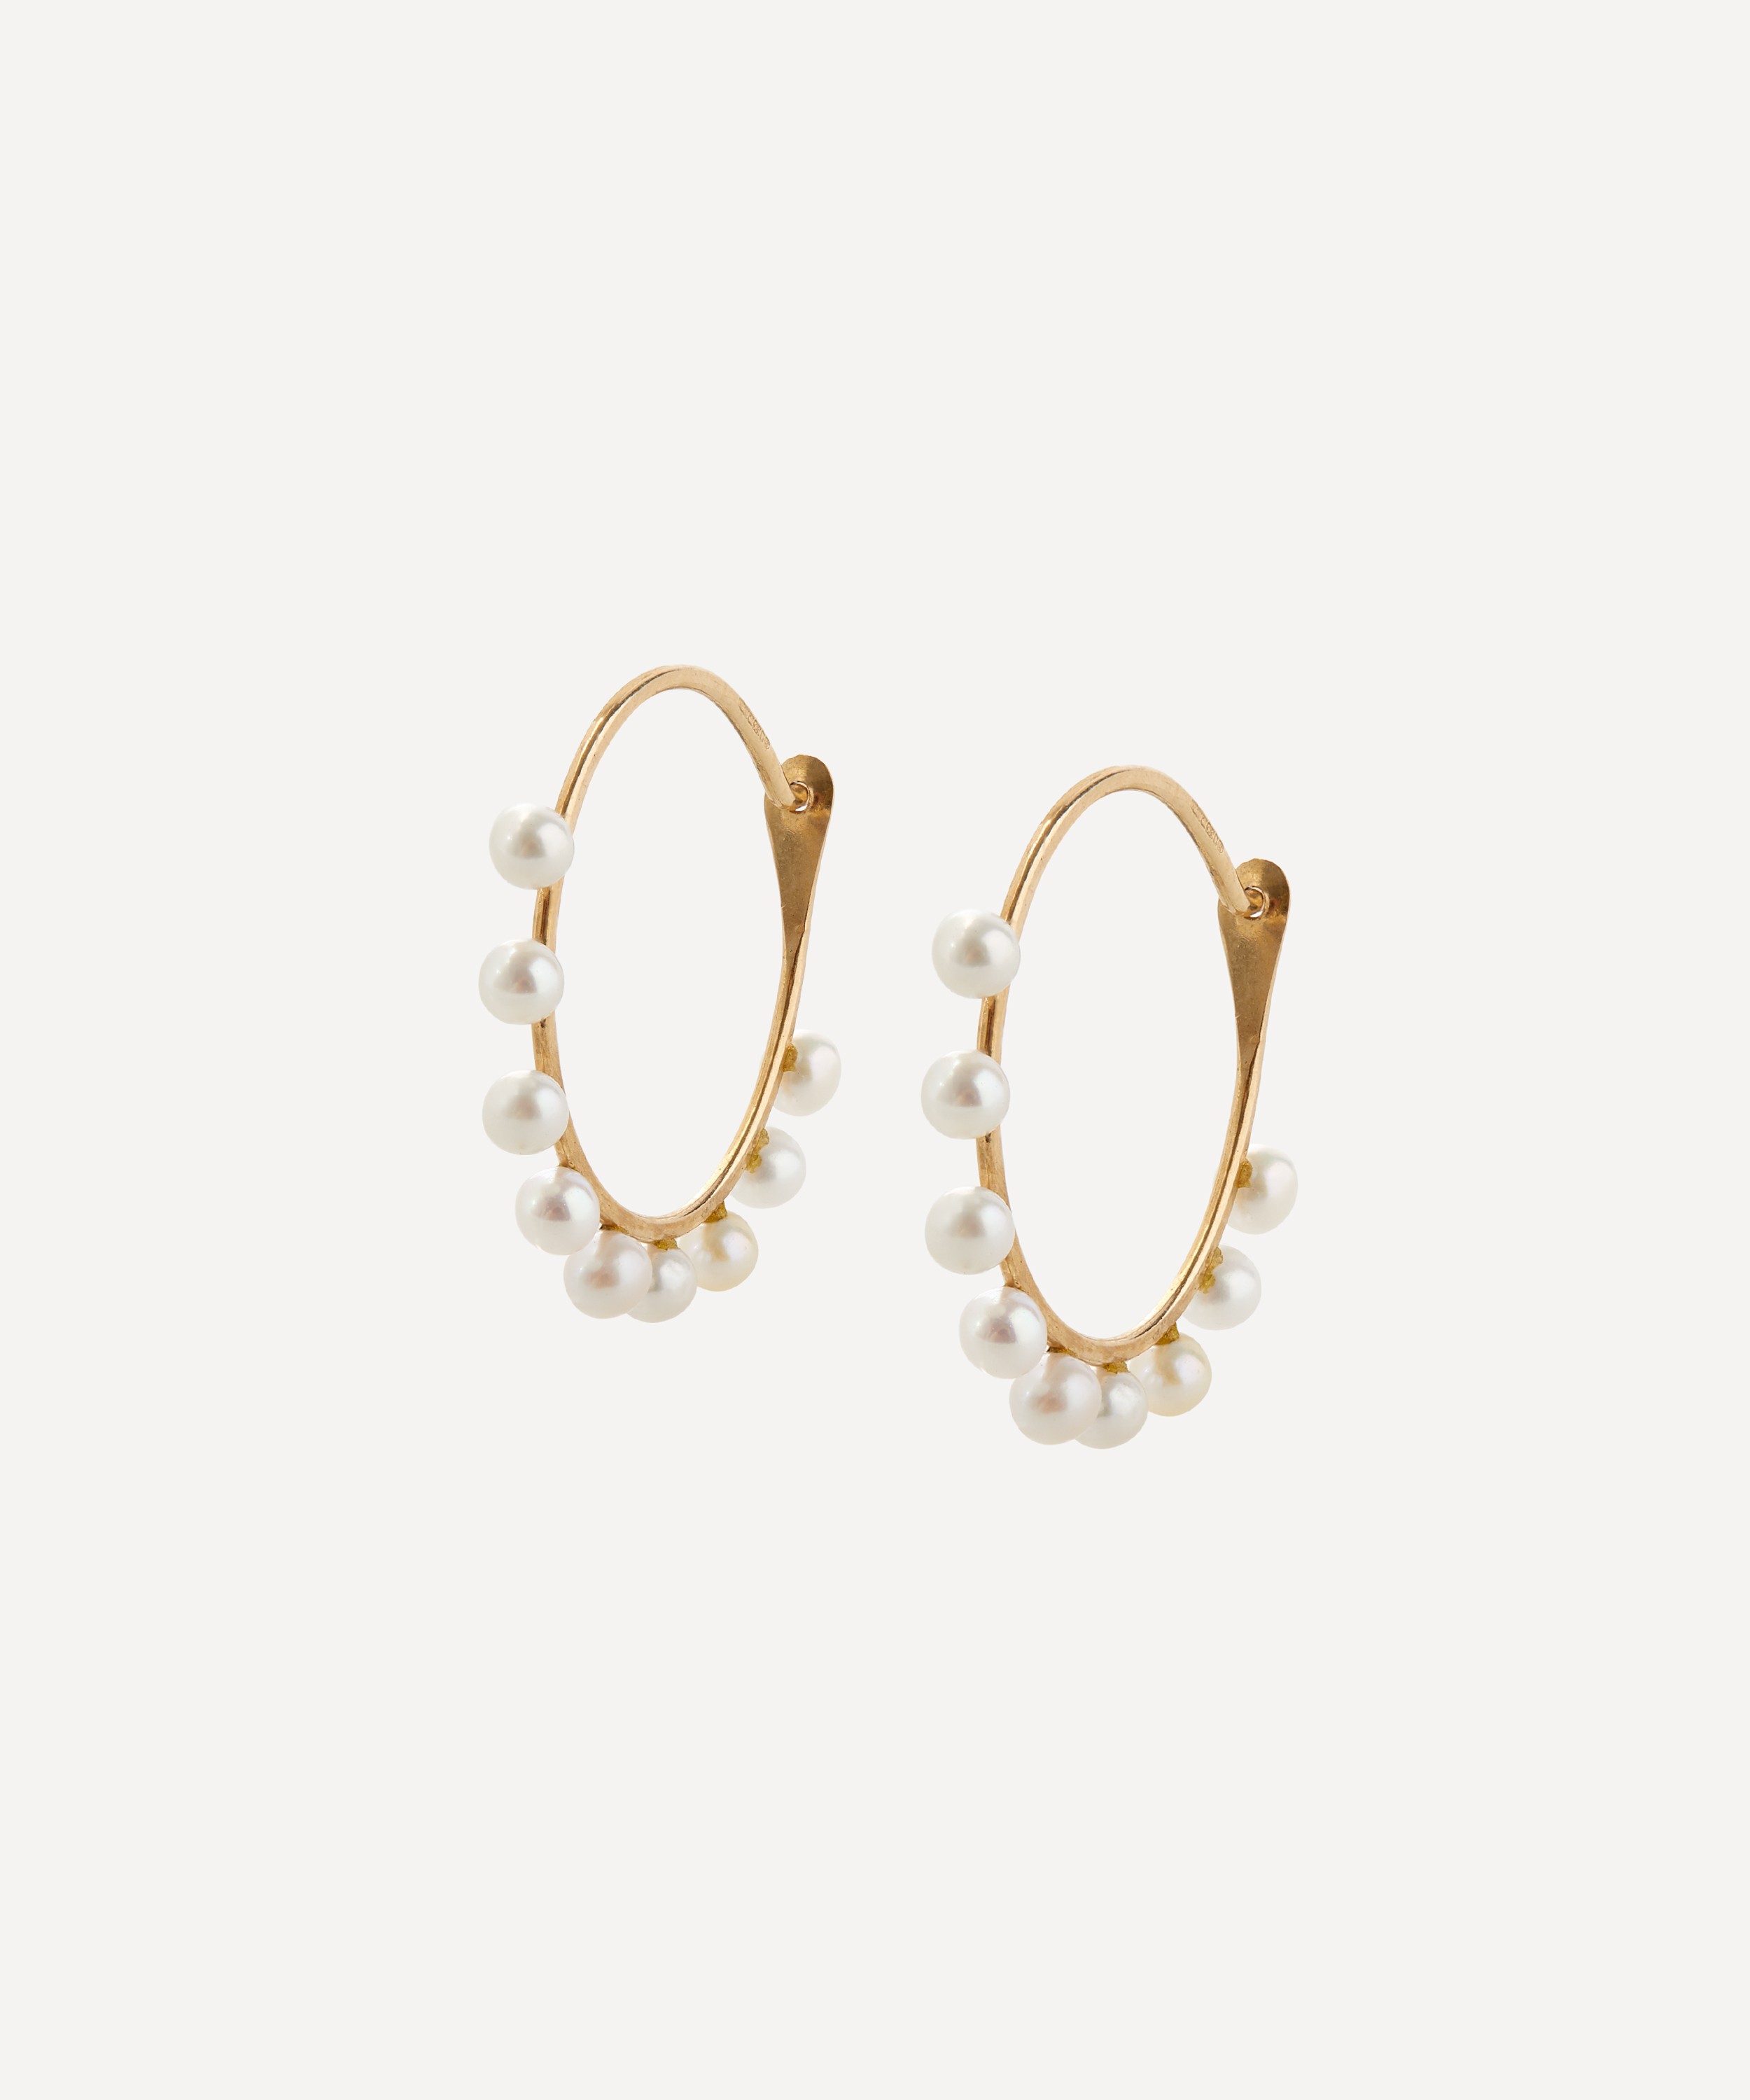 Melissa Joy Manning 14ct Gold Pearl Halo Hoop Earrings | Liberty